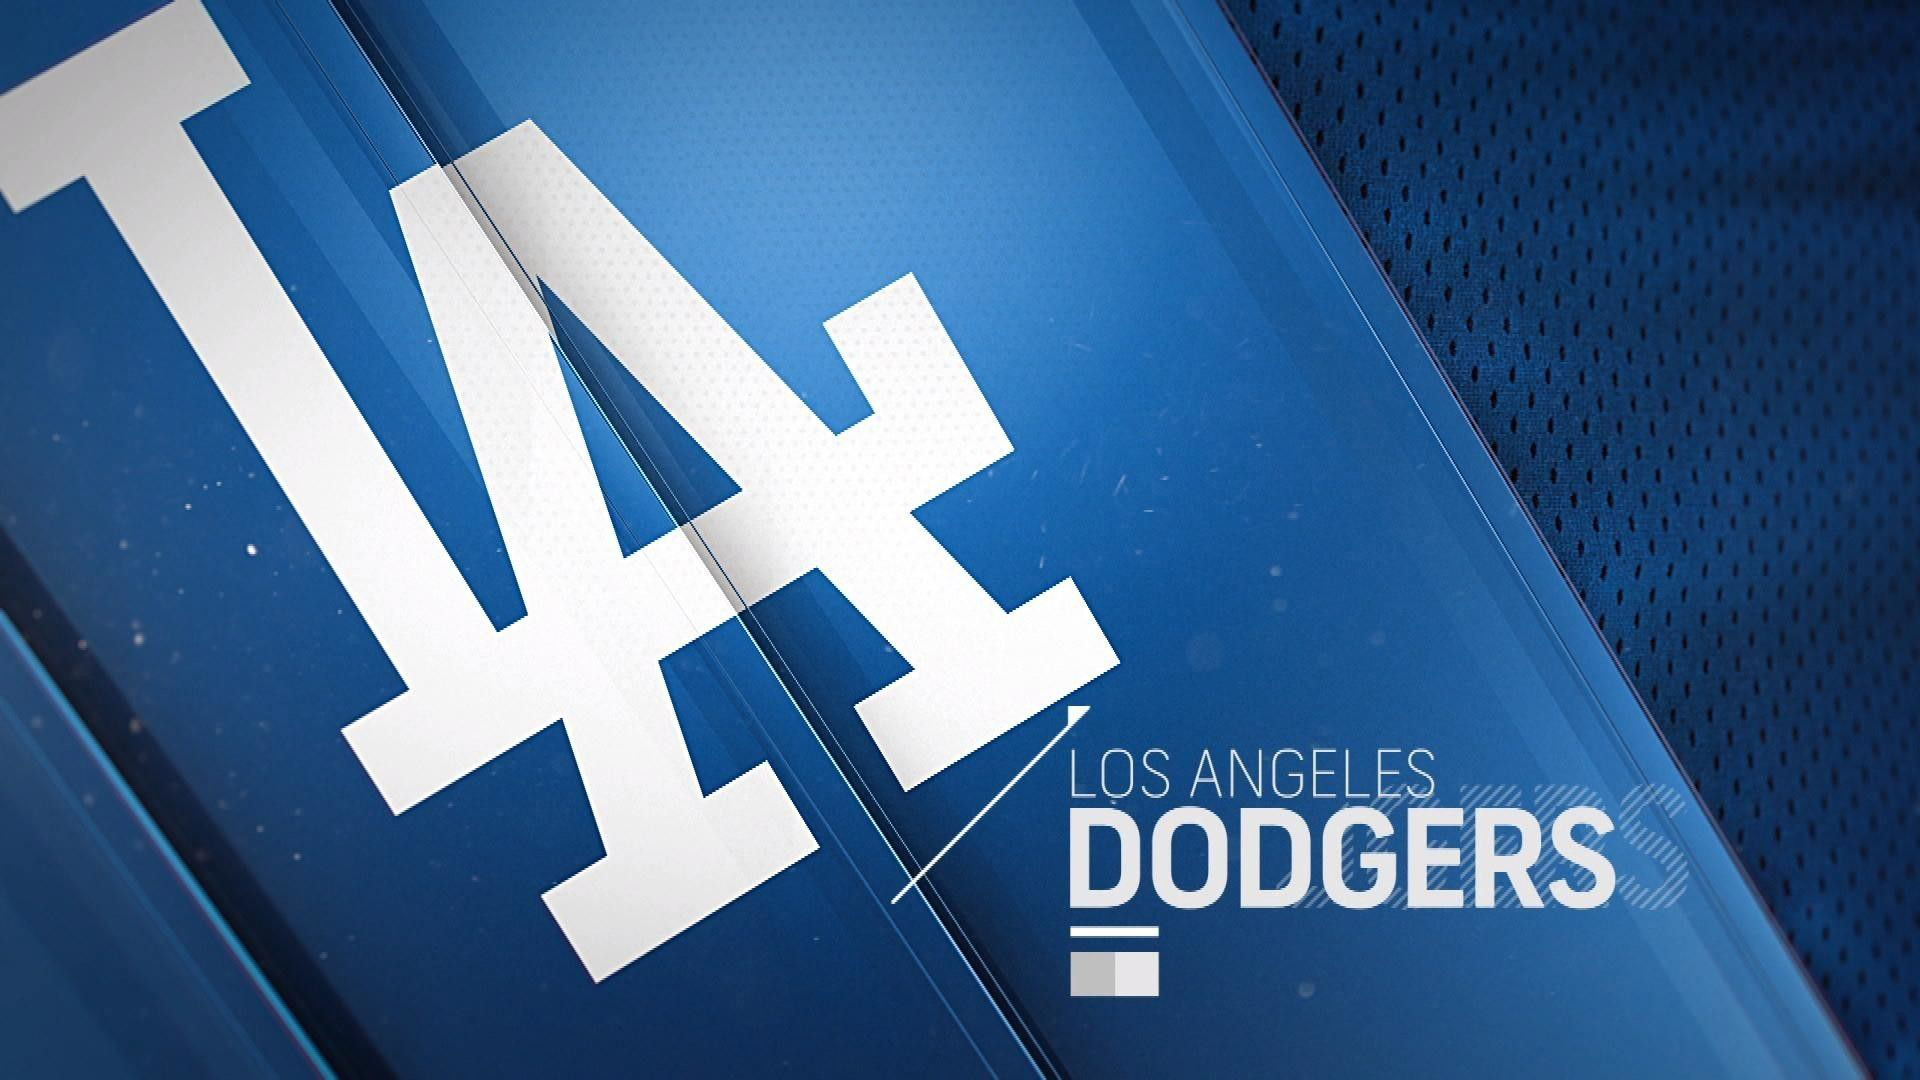 Los Angeles Dodgers With Letter LA On Side 2K Dodgers